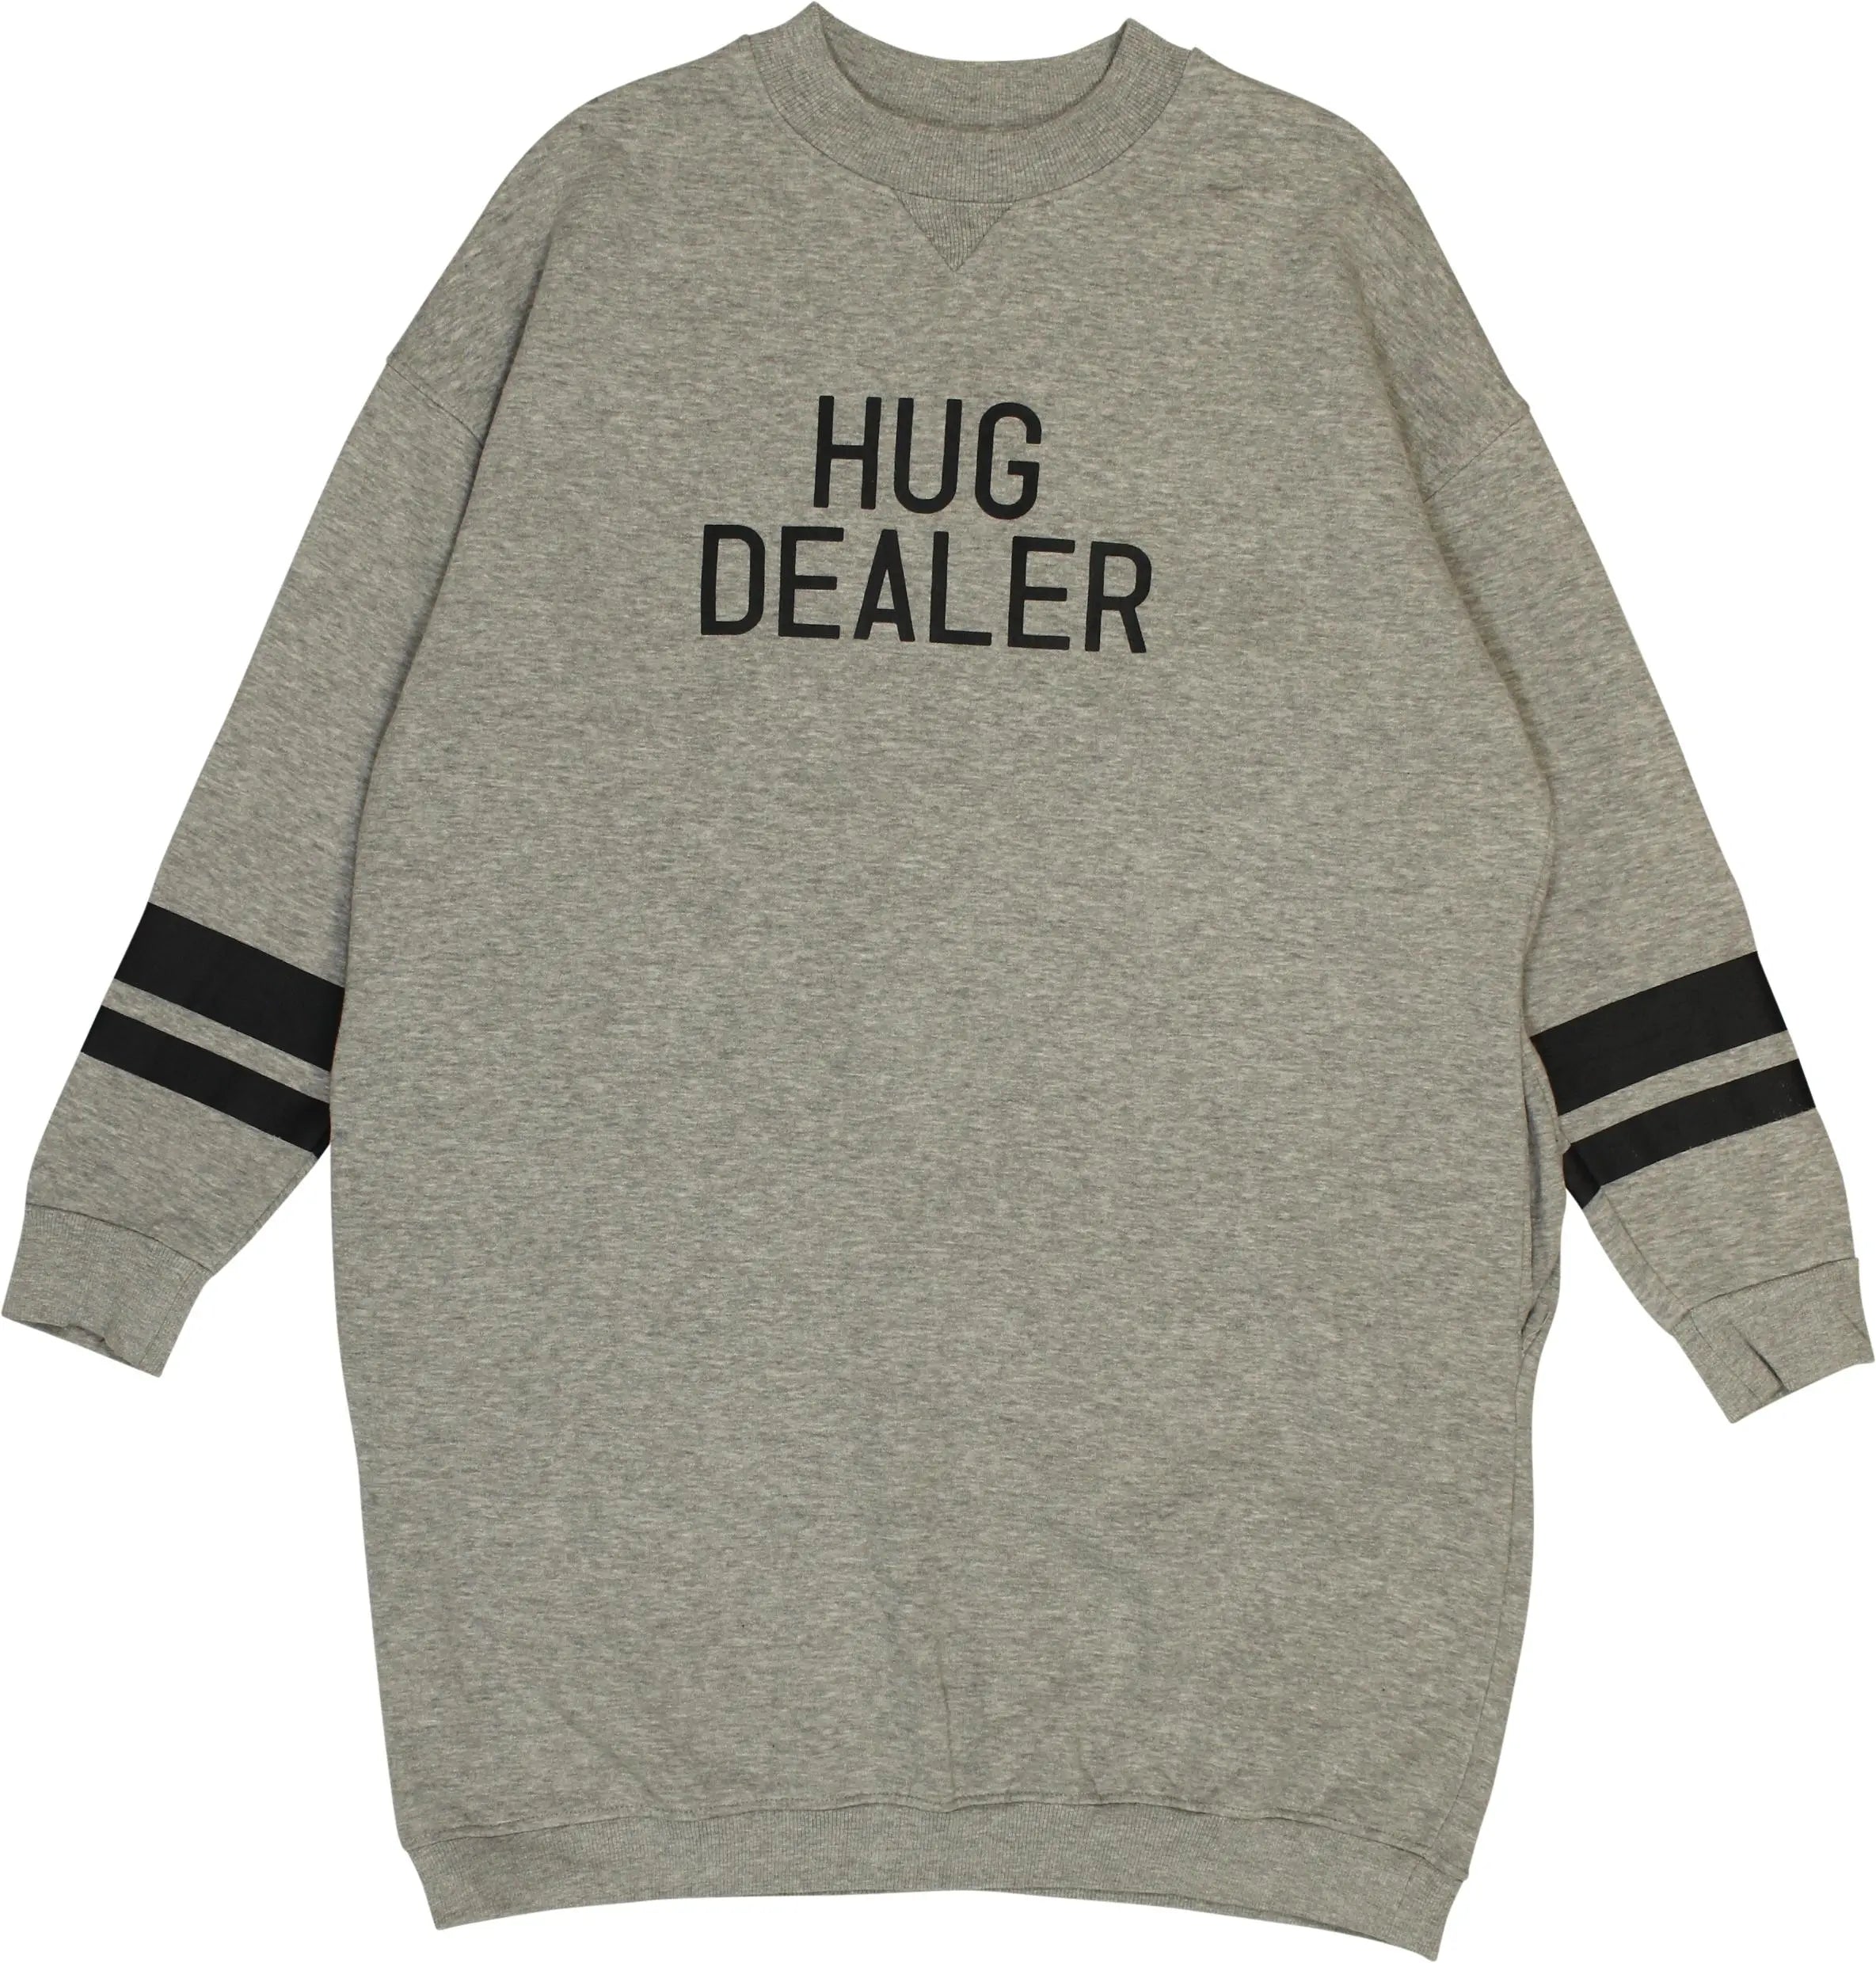 FB Sister - 'Hug Dealer' Sweater Dress- ThriftTale.com - Vintage and second handclothing